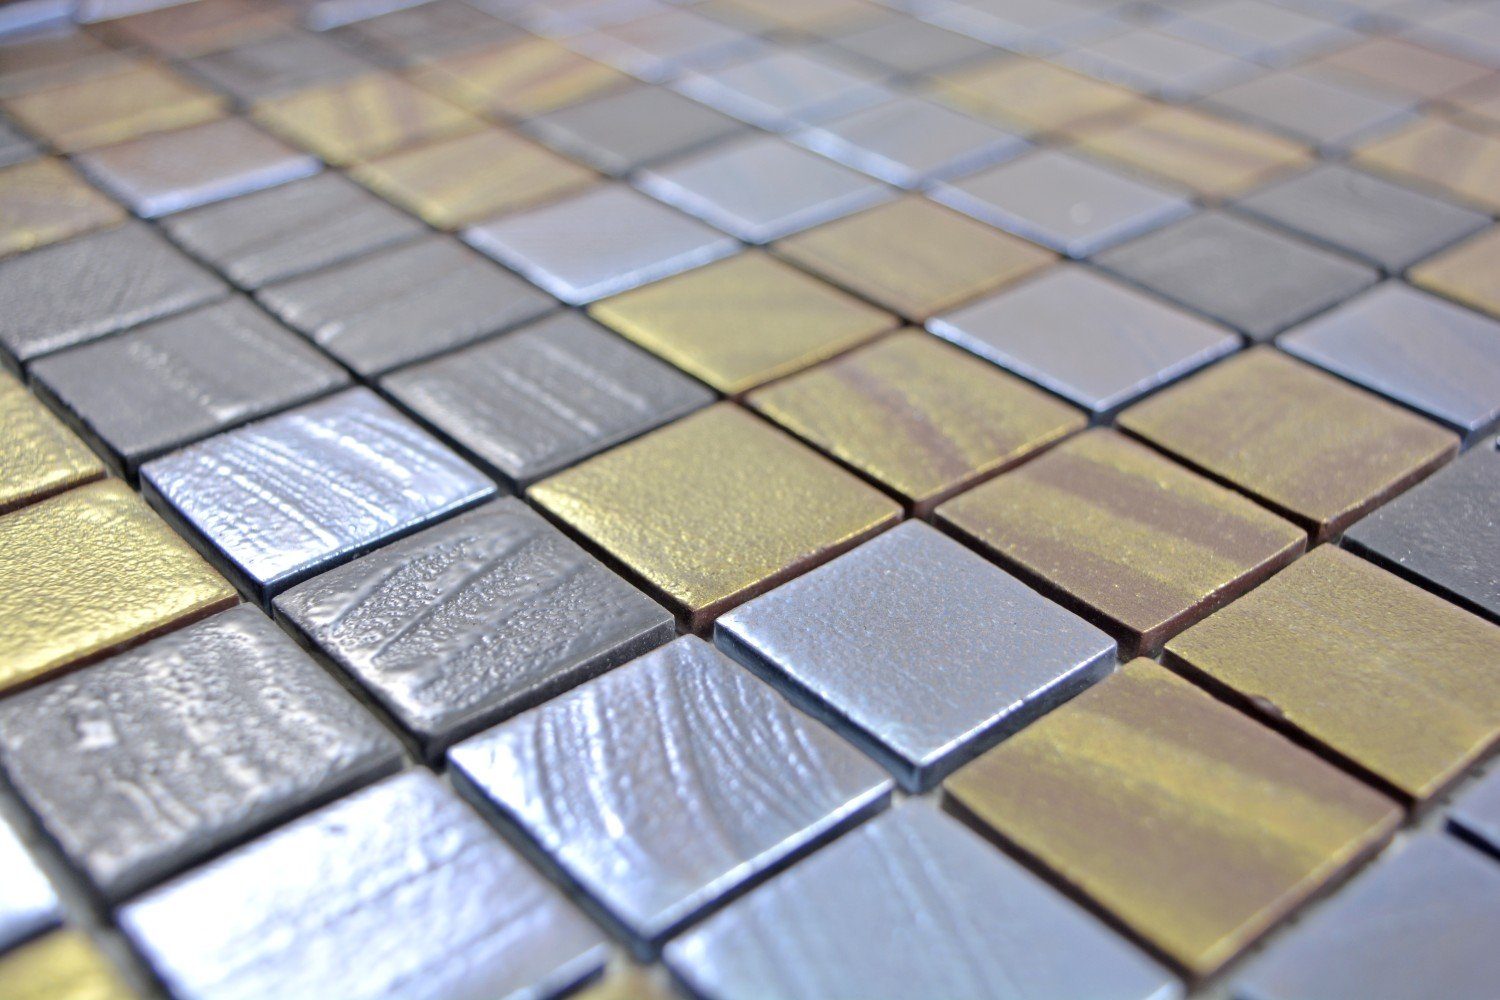 anthrazit Recycling Mosaikfliesen schwarz / satin matt Matten mix Glasmosaik Mosani 10